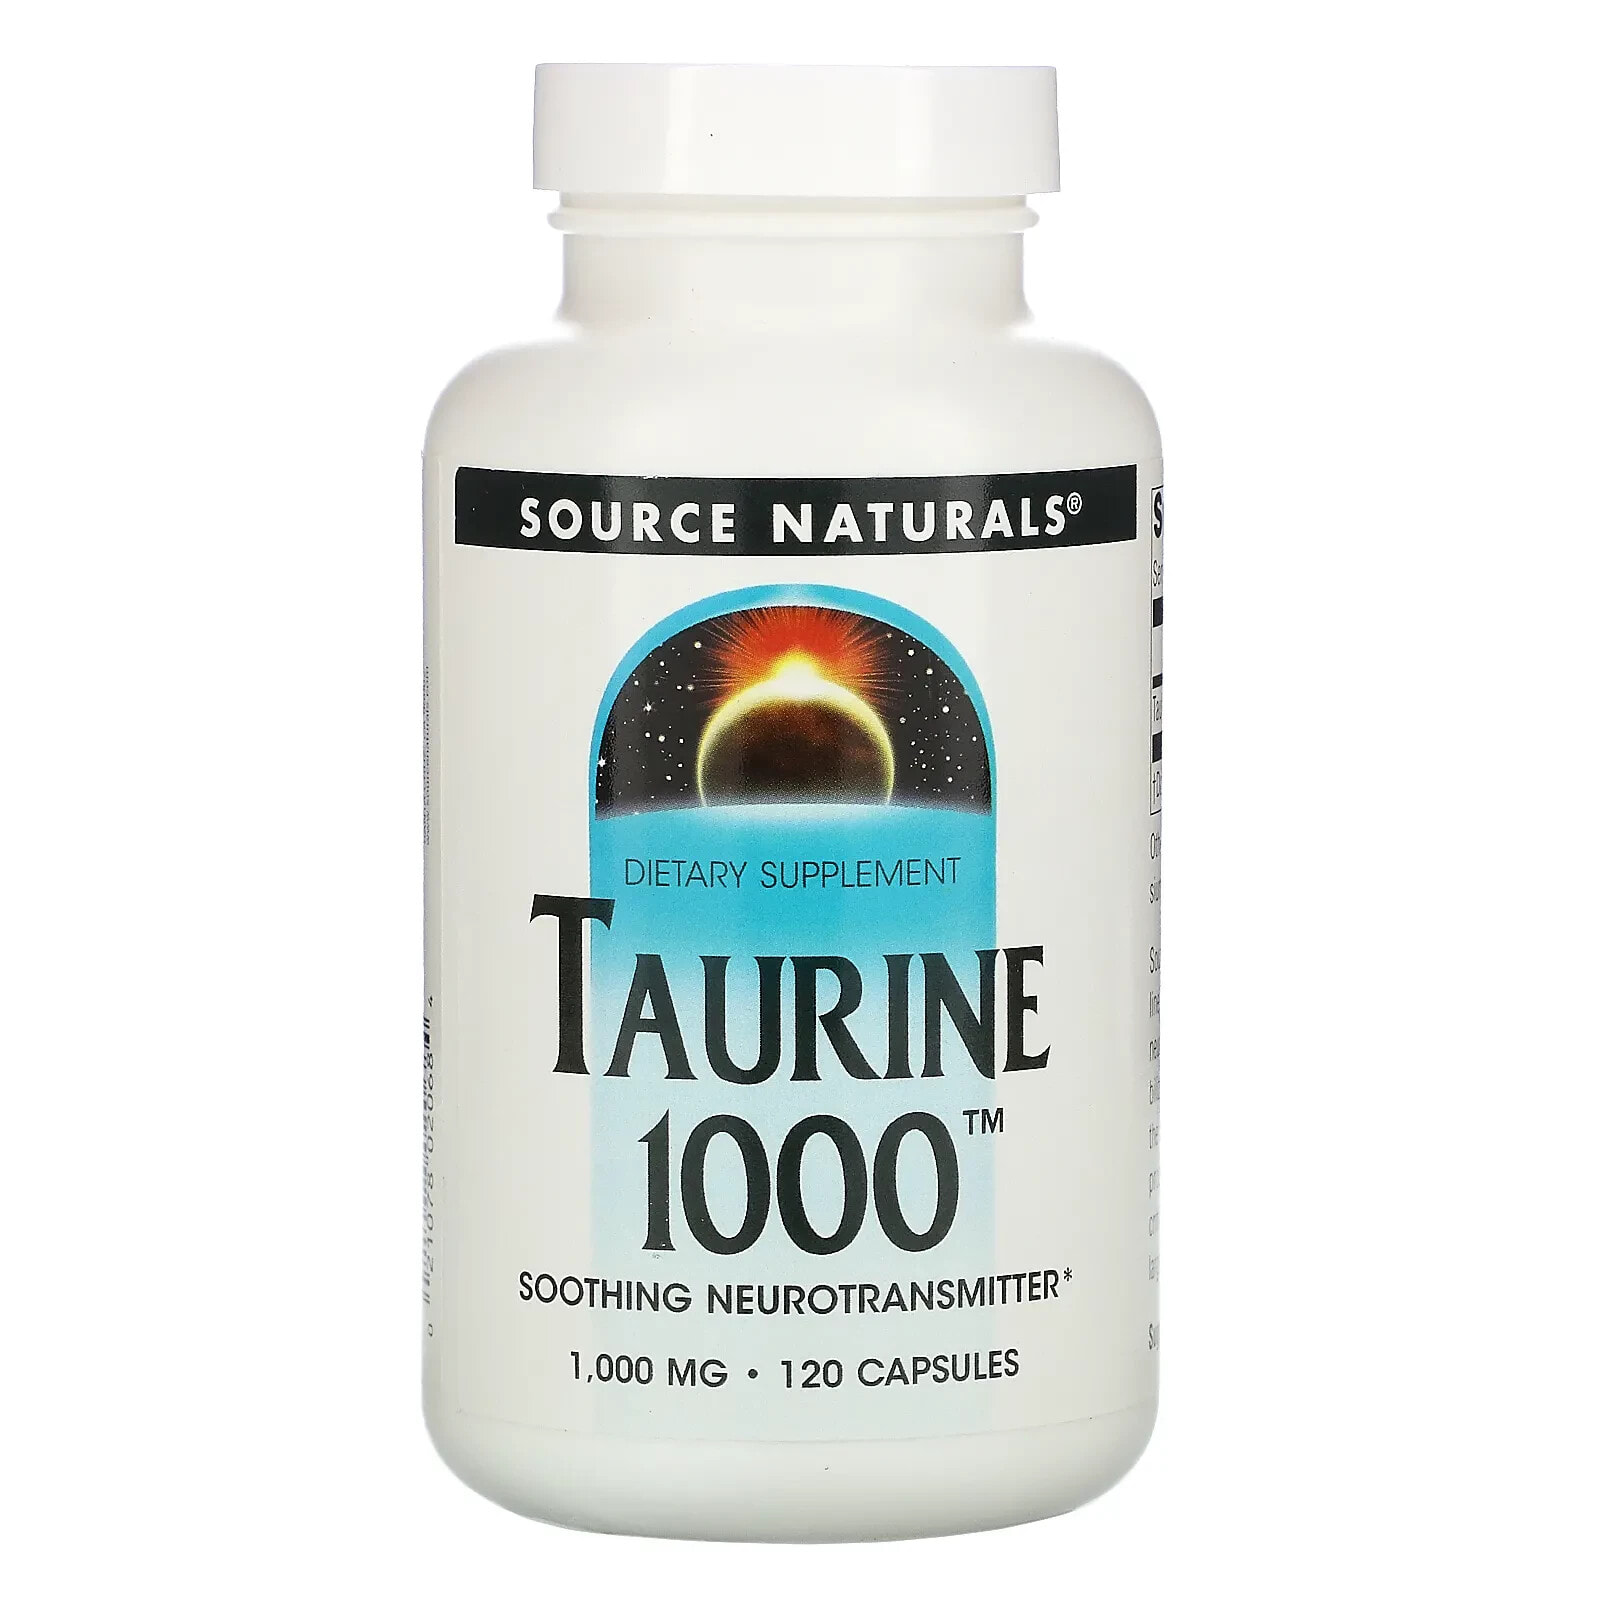 Source Naturals, Таурин, 1000 мг, 240 капсул